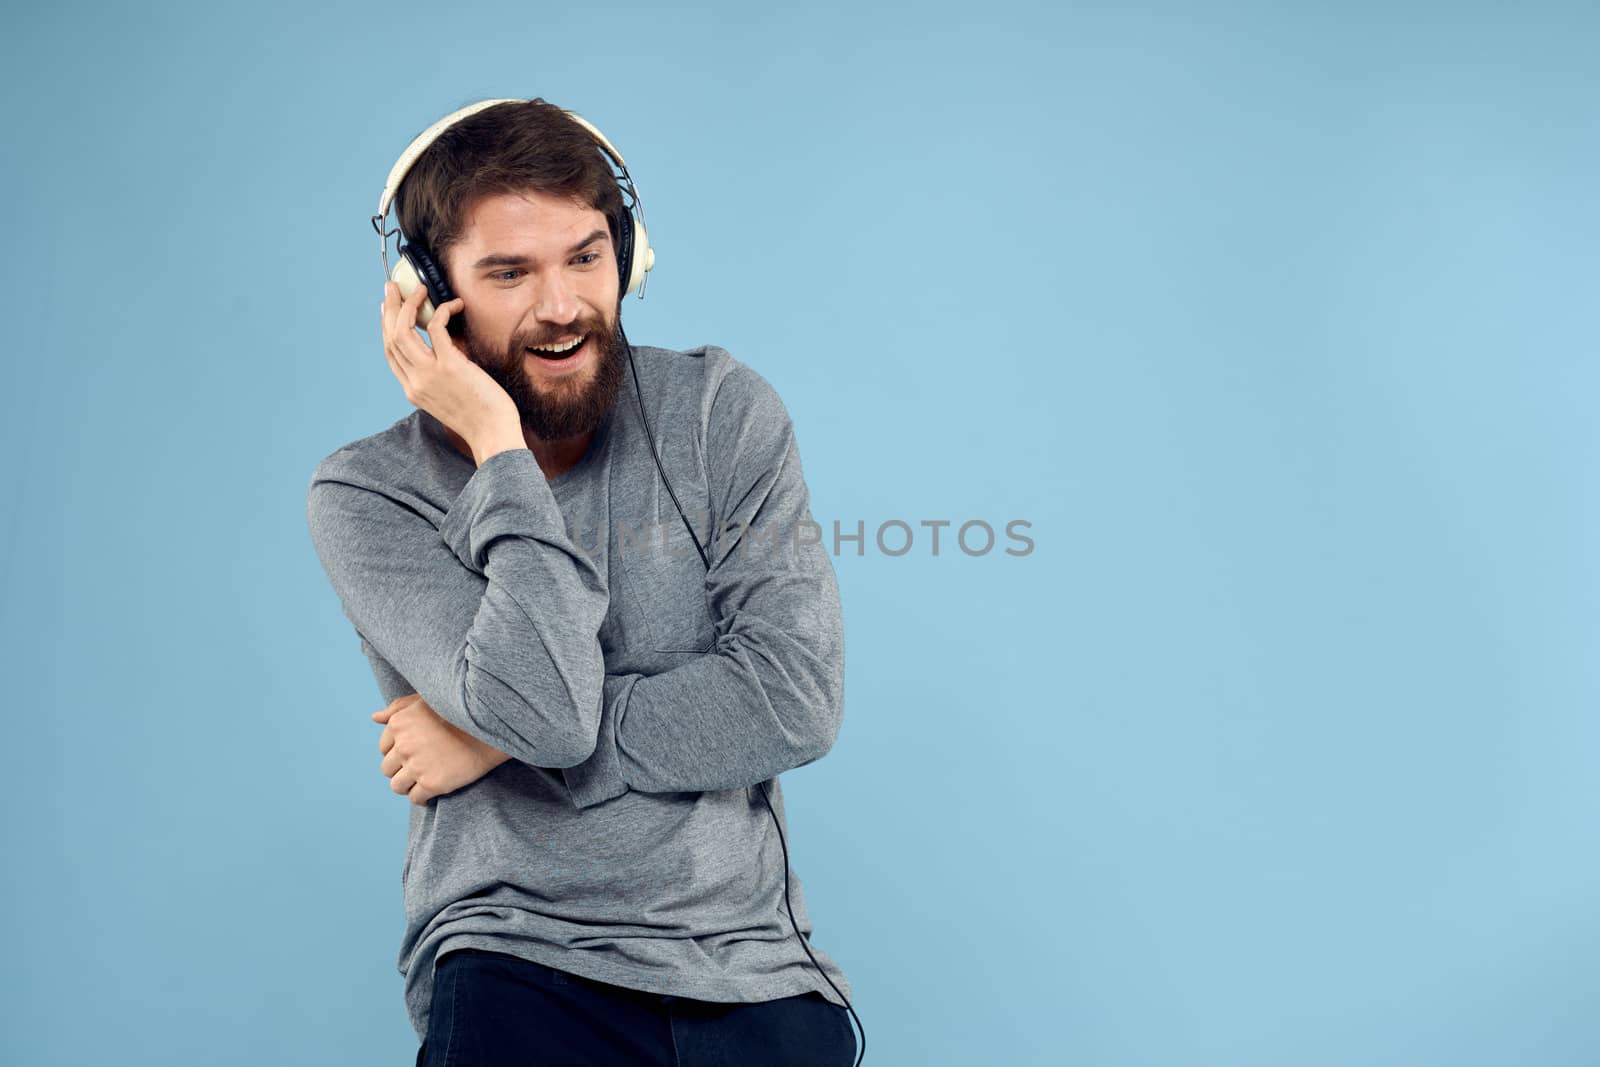 man wearing headphones music emotion lifestyle modern style technology blue background. High quality photo